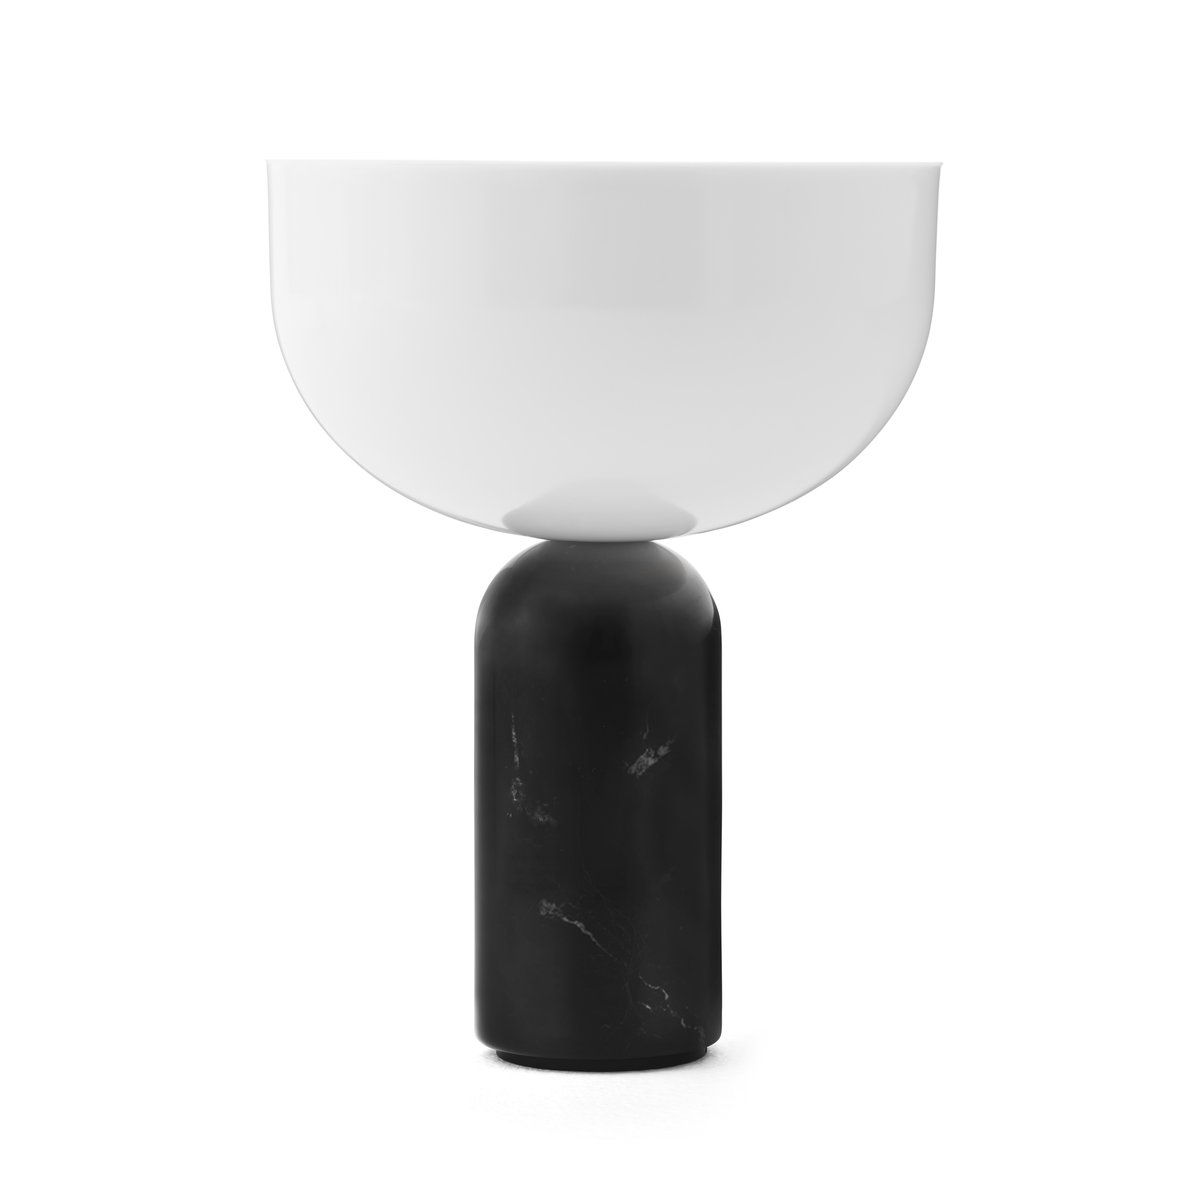 New Works Kizu portable tafellamp Black marble